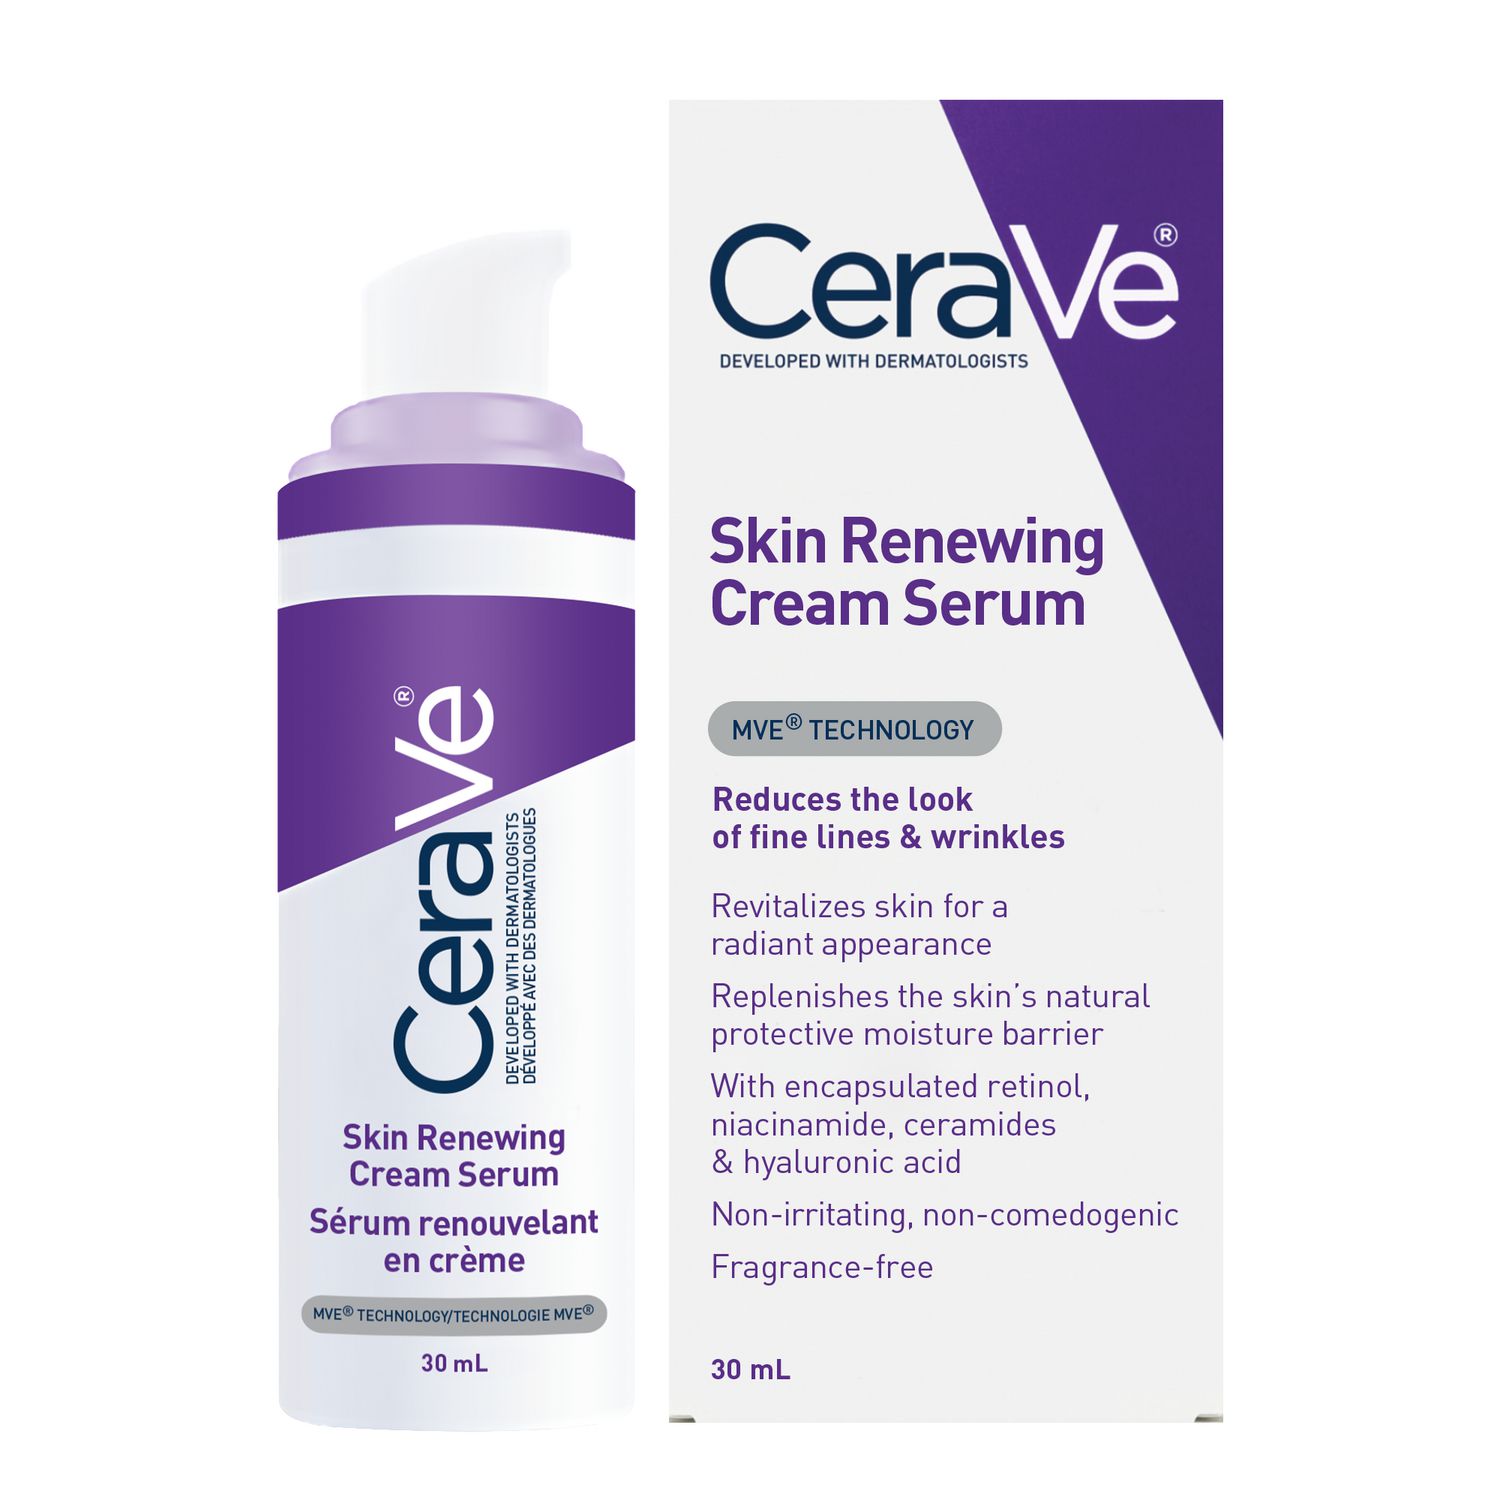 Cerave Skin Renewing Retinol Serum, 30ml